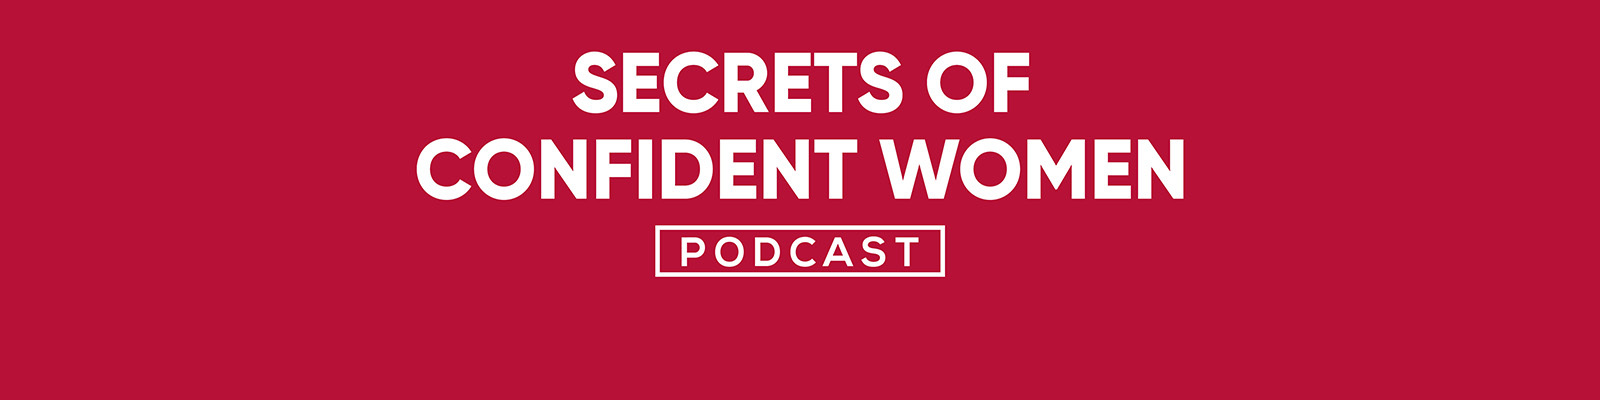 Secrets of Confident Women Podcast